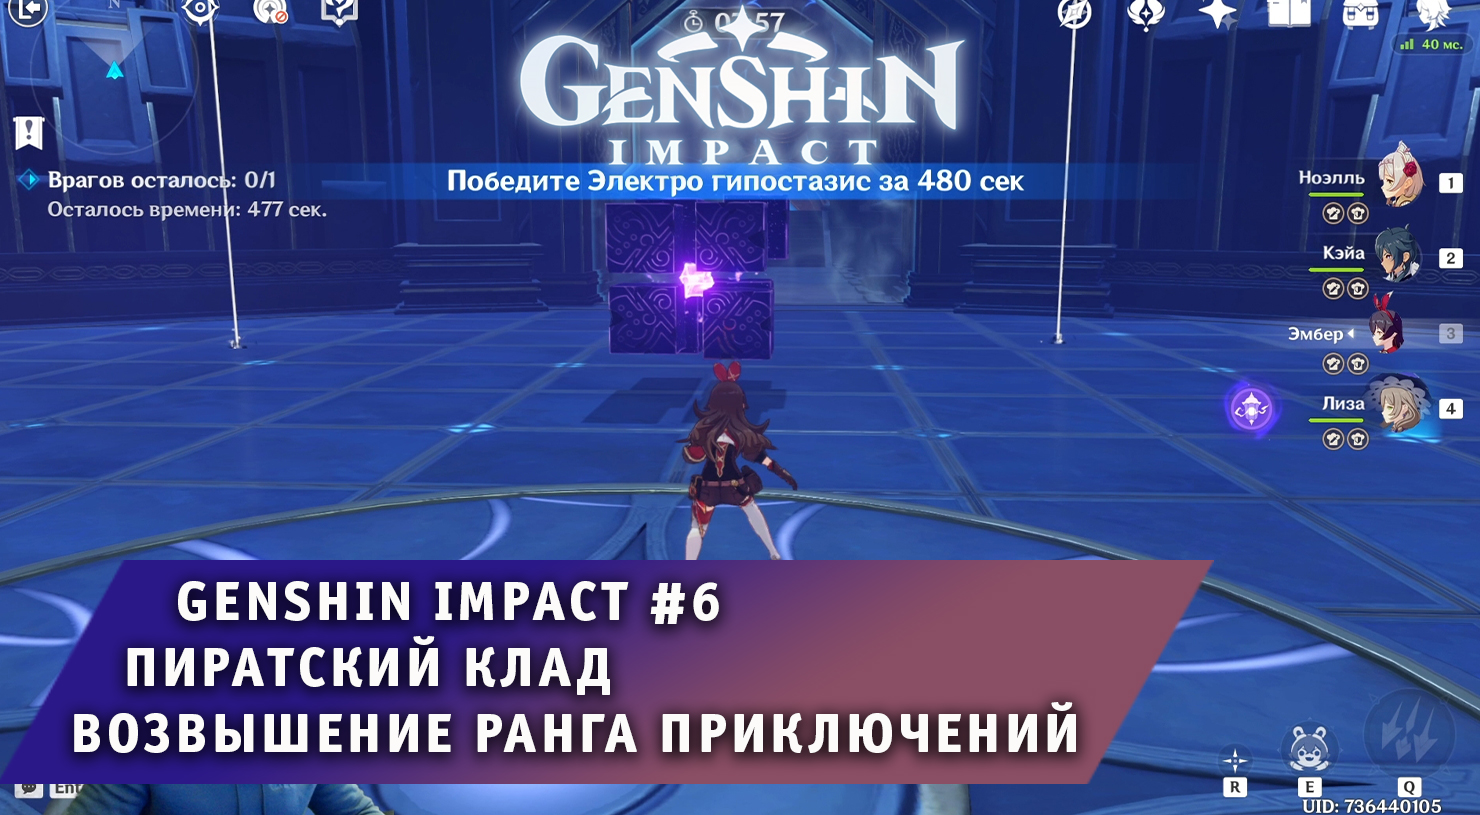 Ранг приключения genshin. Возвышение ранга приключений 1 Genshin Impact. Пиратский клад Геншин Импакт. Задание возвышение ранга. Задание возвышение ранга приключения 1 Genshin Impact.